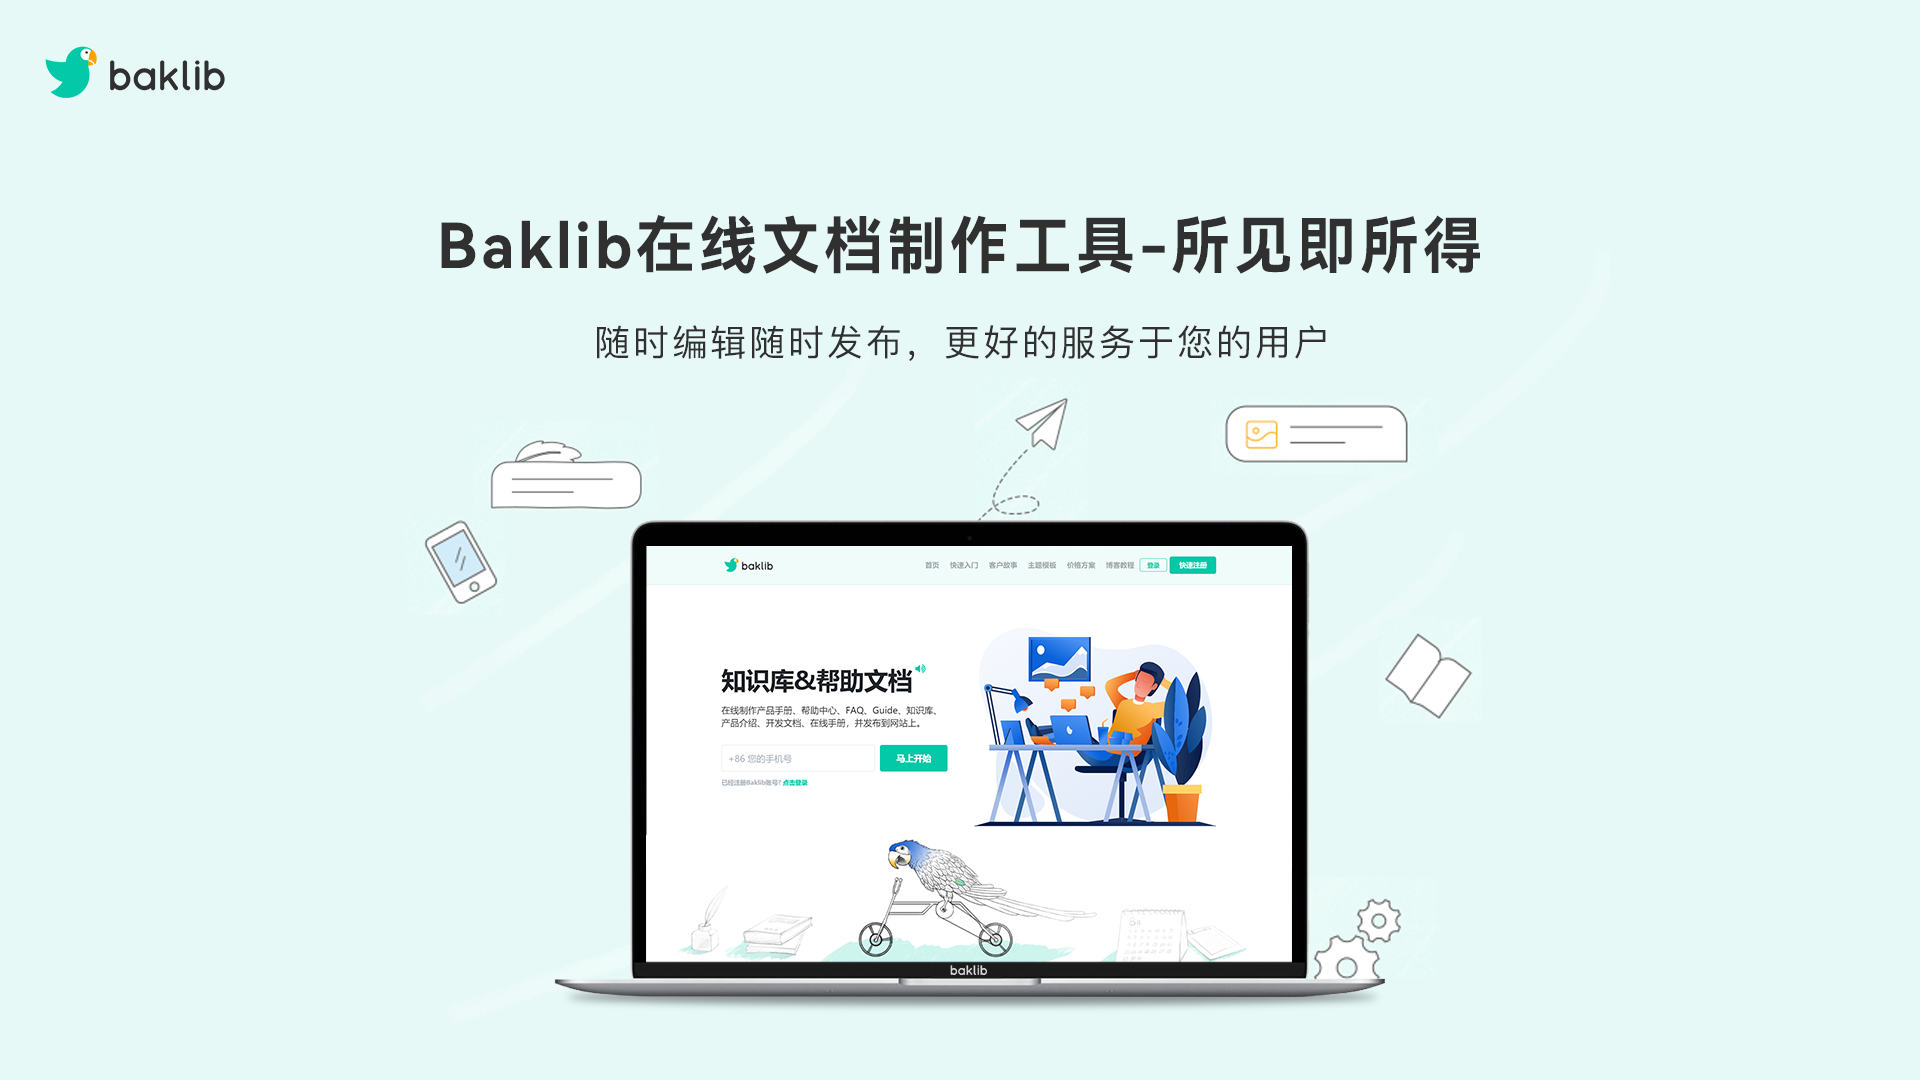 Baklib 产品帮助中心 客户服务